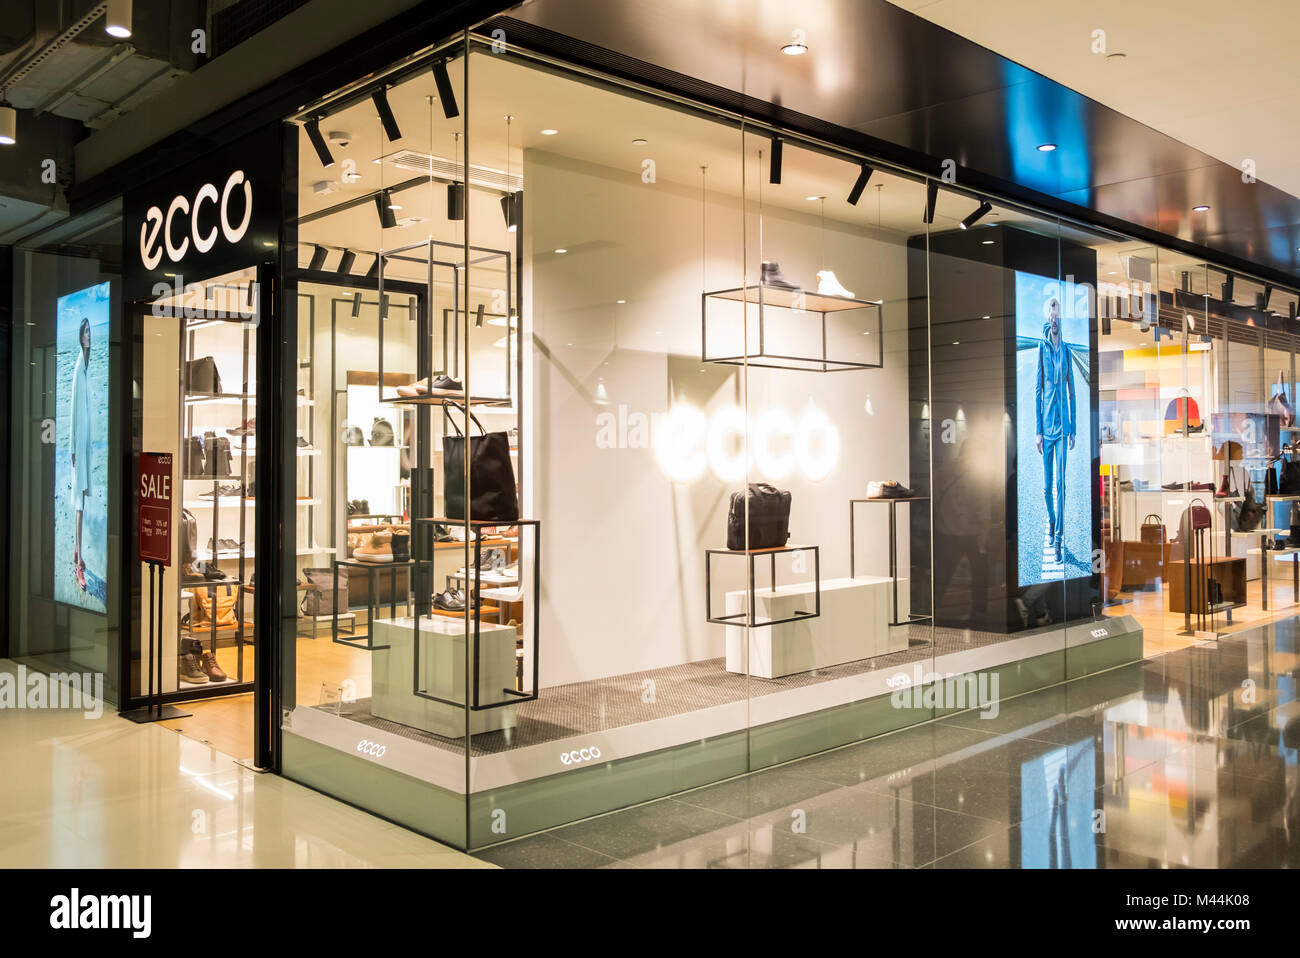 Hongkong - Februar 4, 2018: Ecco schuh Store in Hongkong. Seit 1963, Ecco ist ein dänischer Schuster Unternehmen hohe Qualität, casual Komfortable Stockfoto